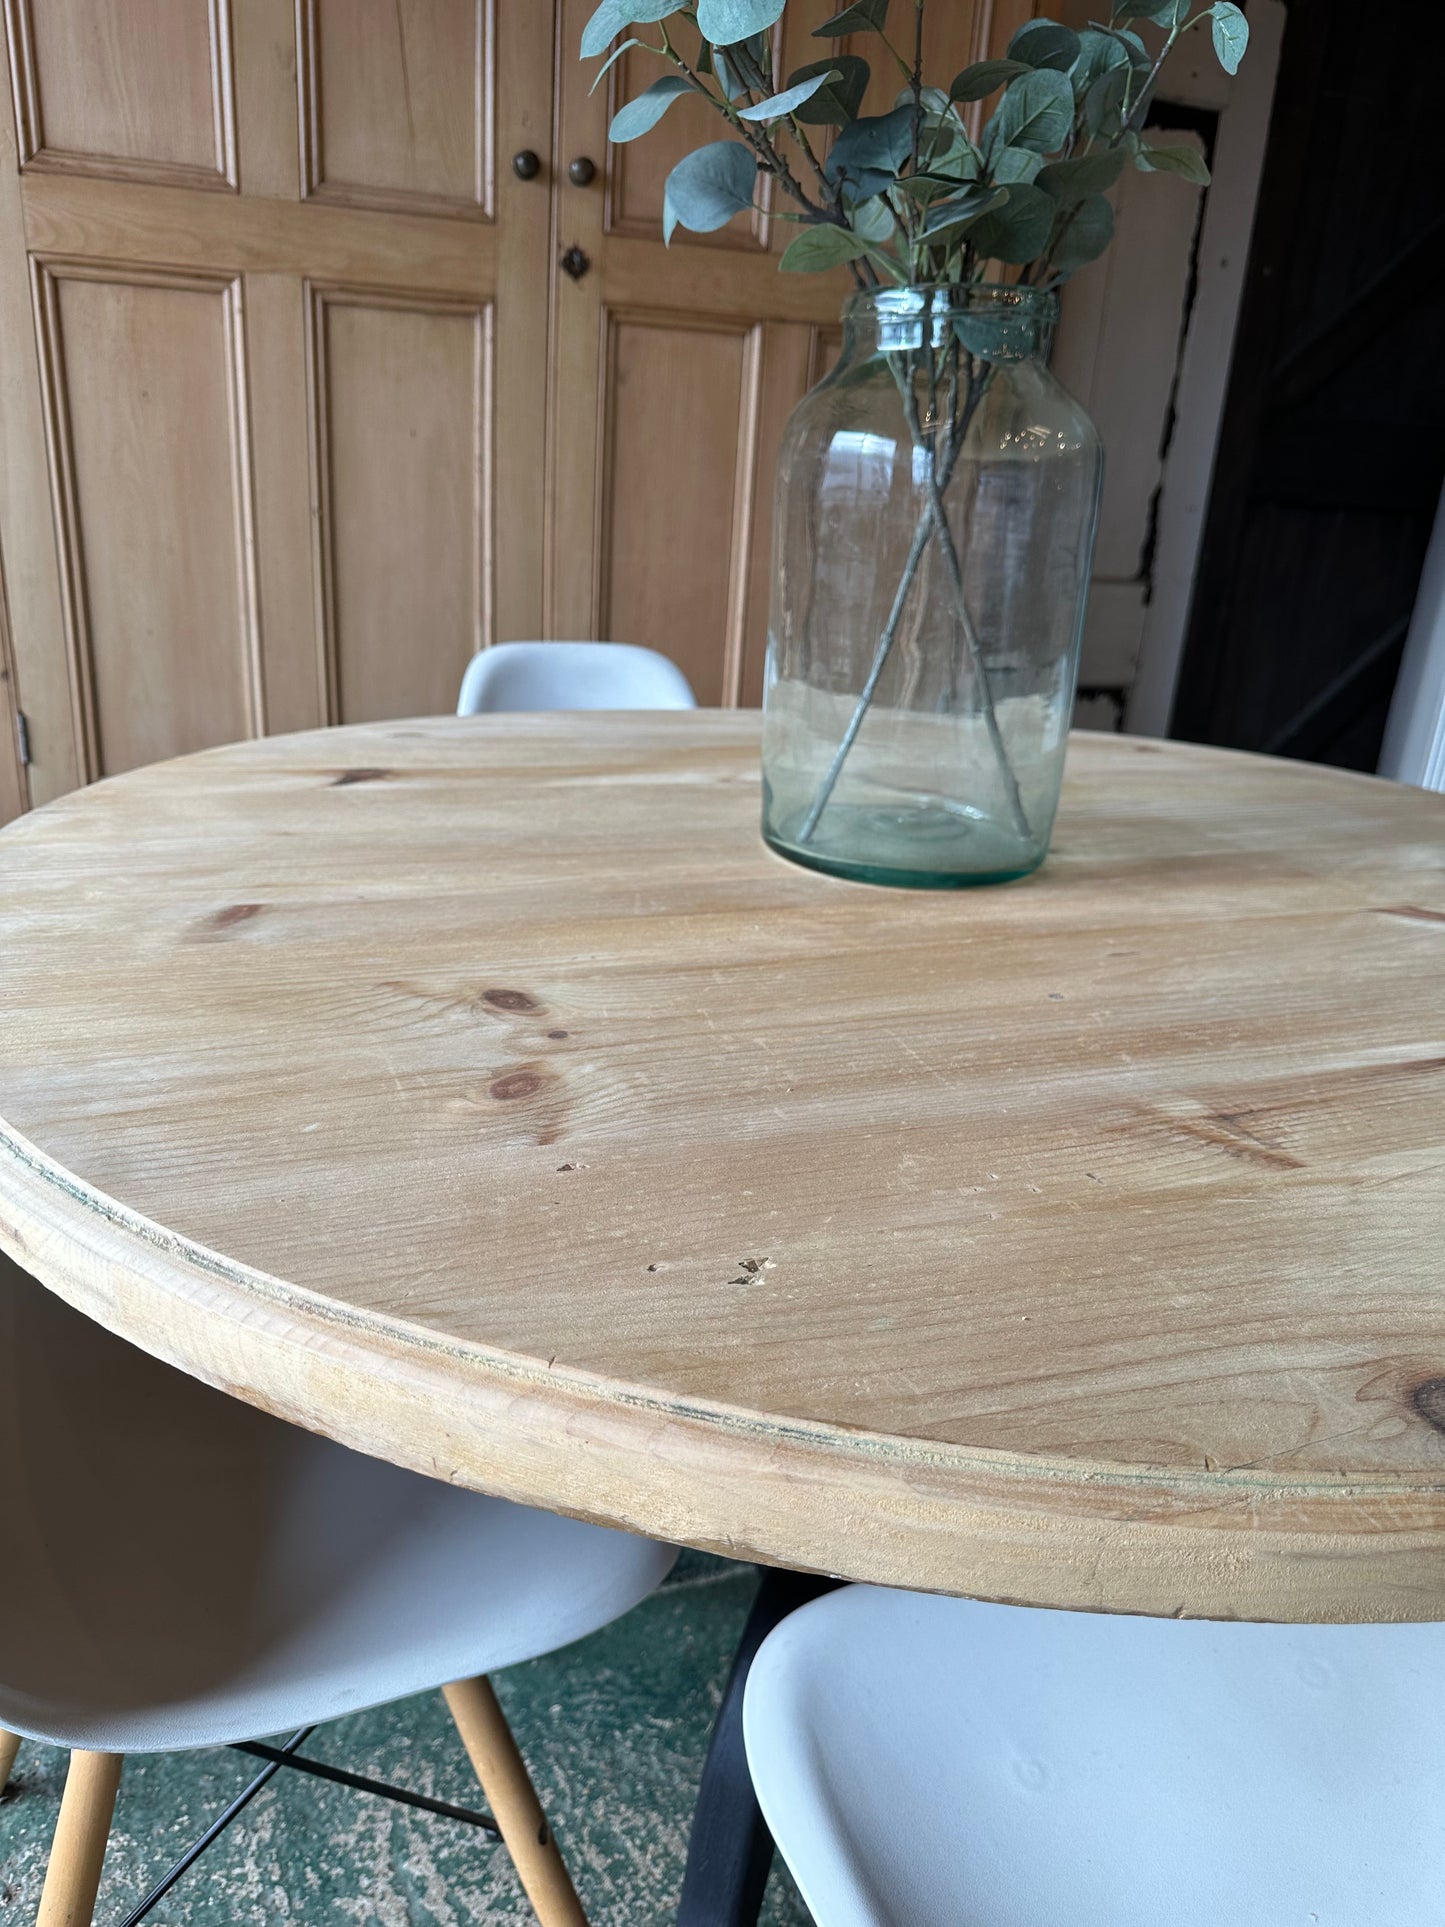 Rustic pine pedestal table